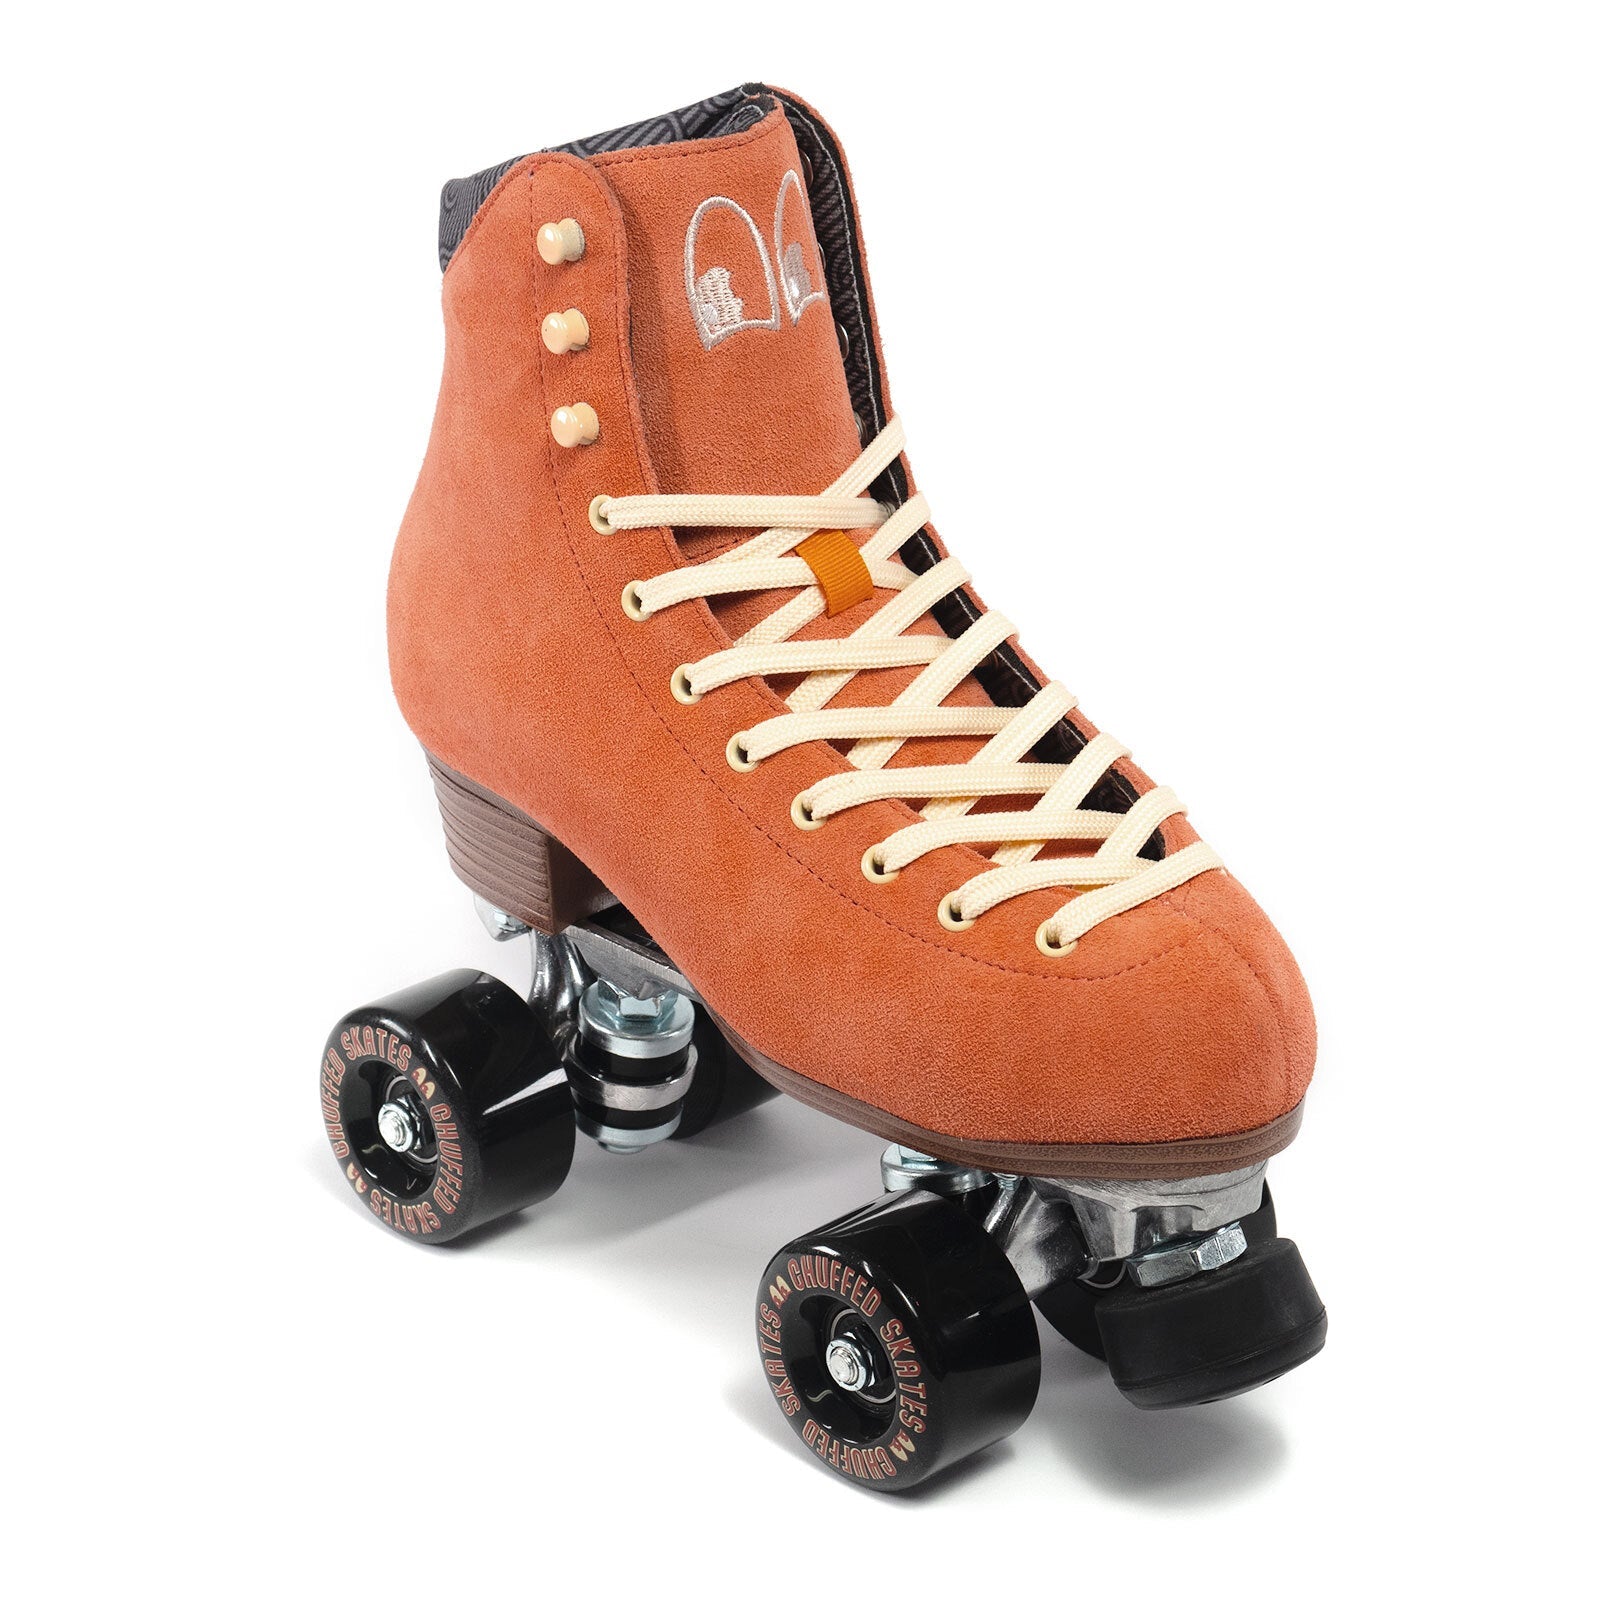 Chuffed Skates peach pink roller skates